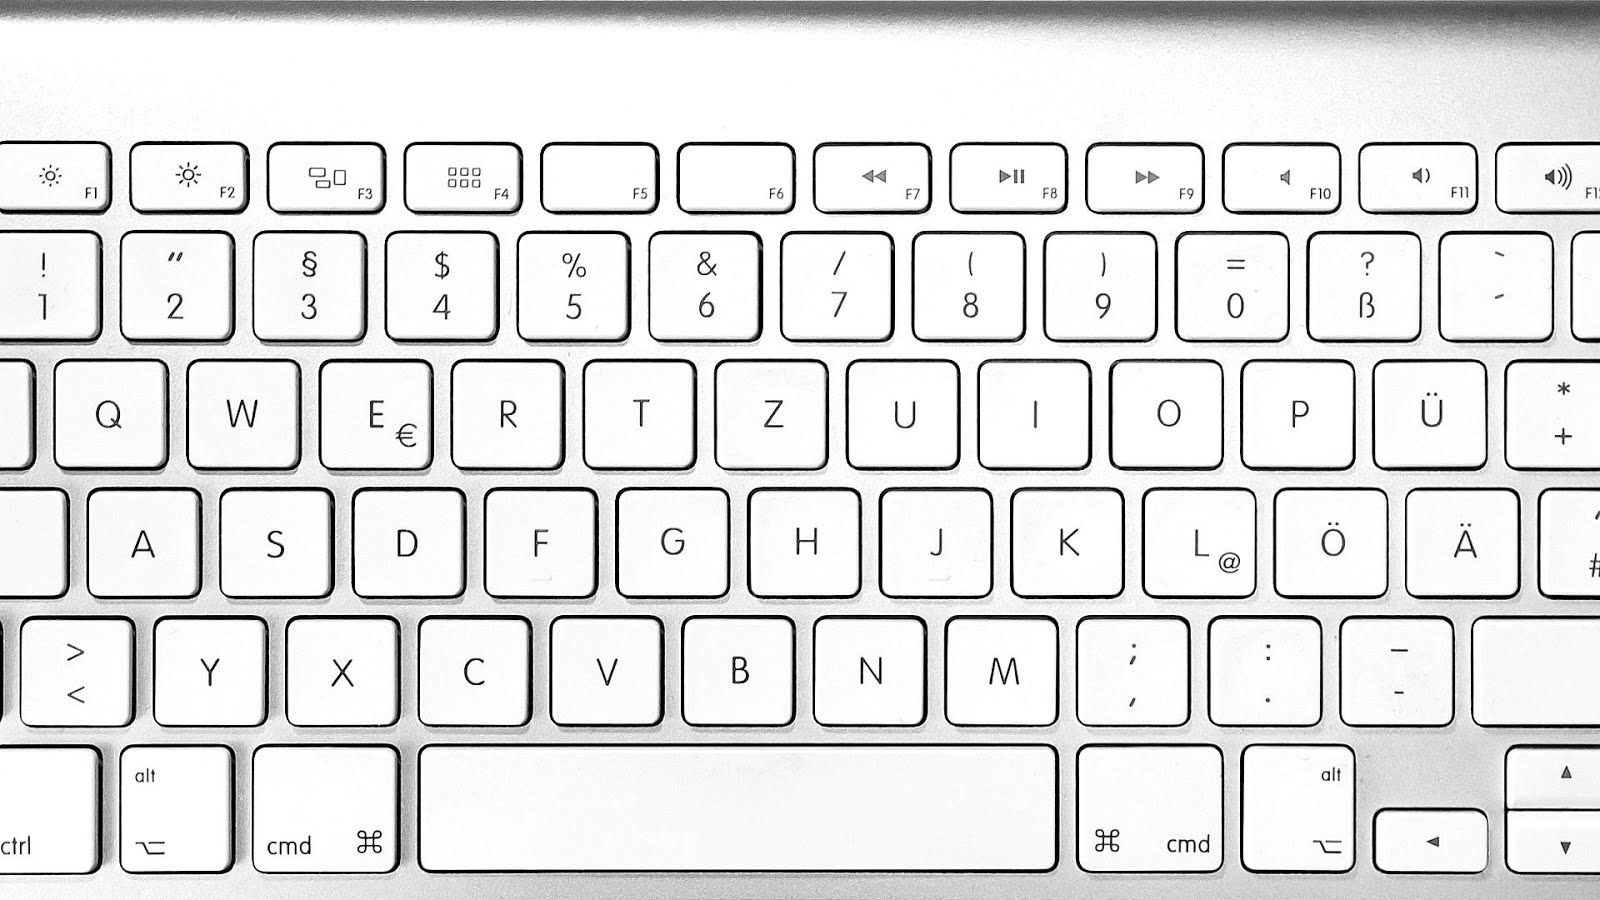 German QWERTz Keyboard Layout